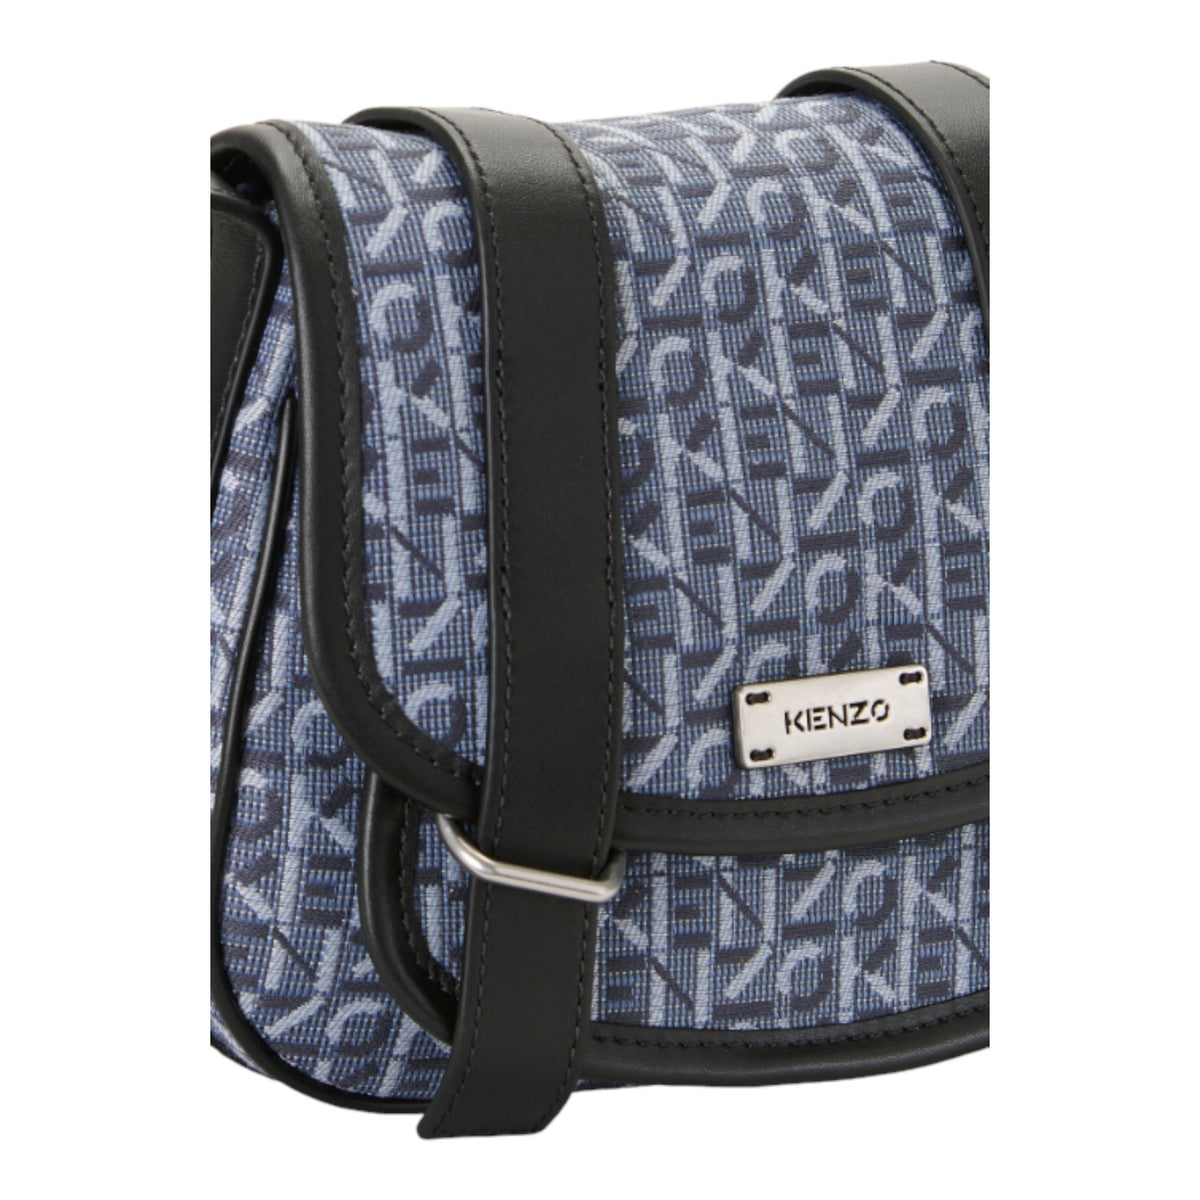 Kenzo Women's Mini Messenger Bag